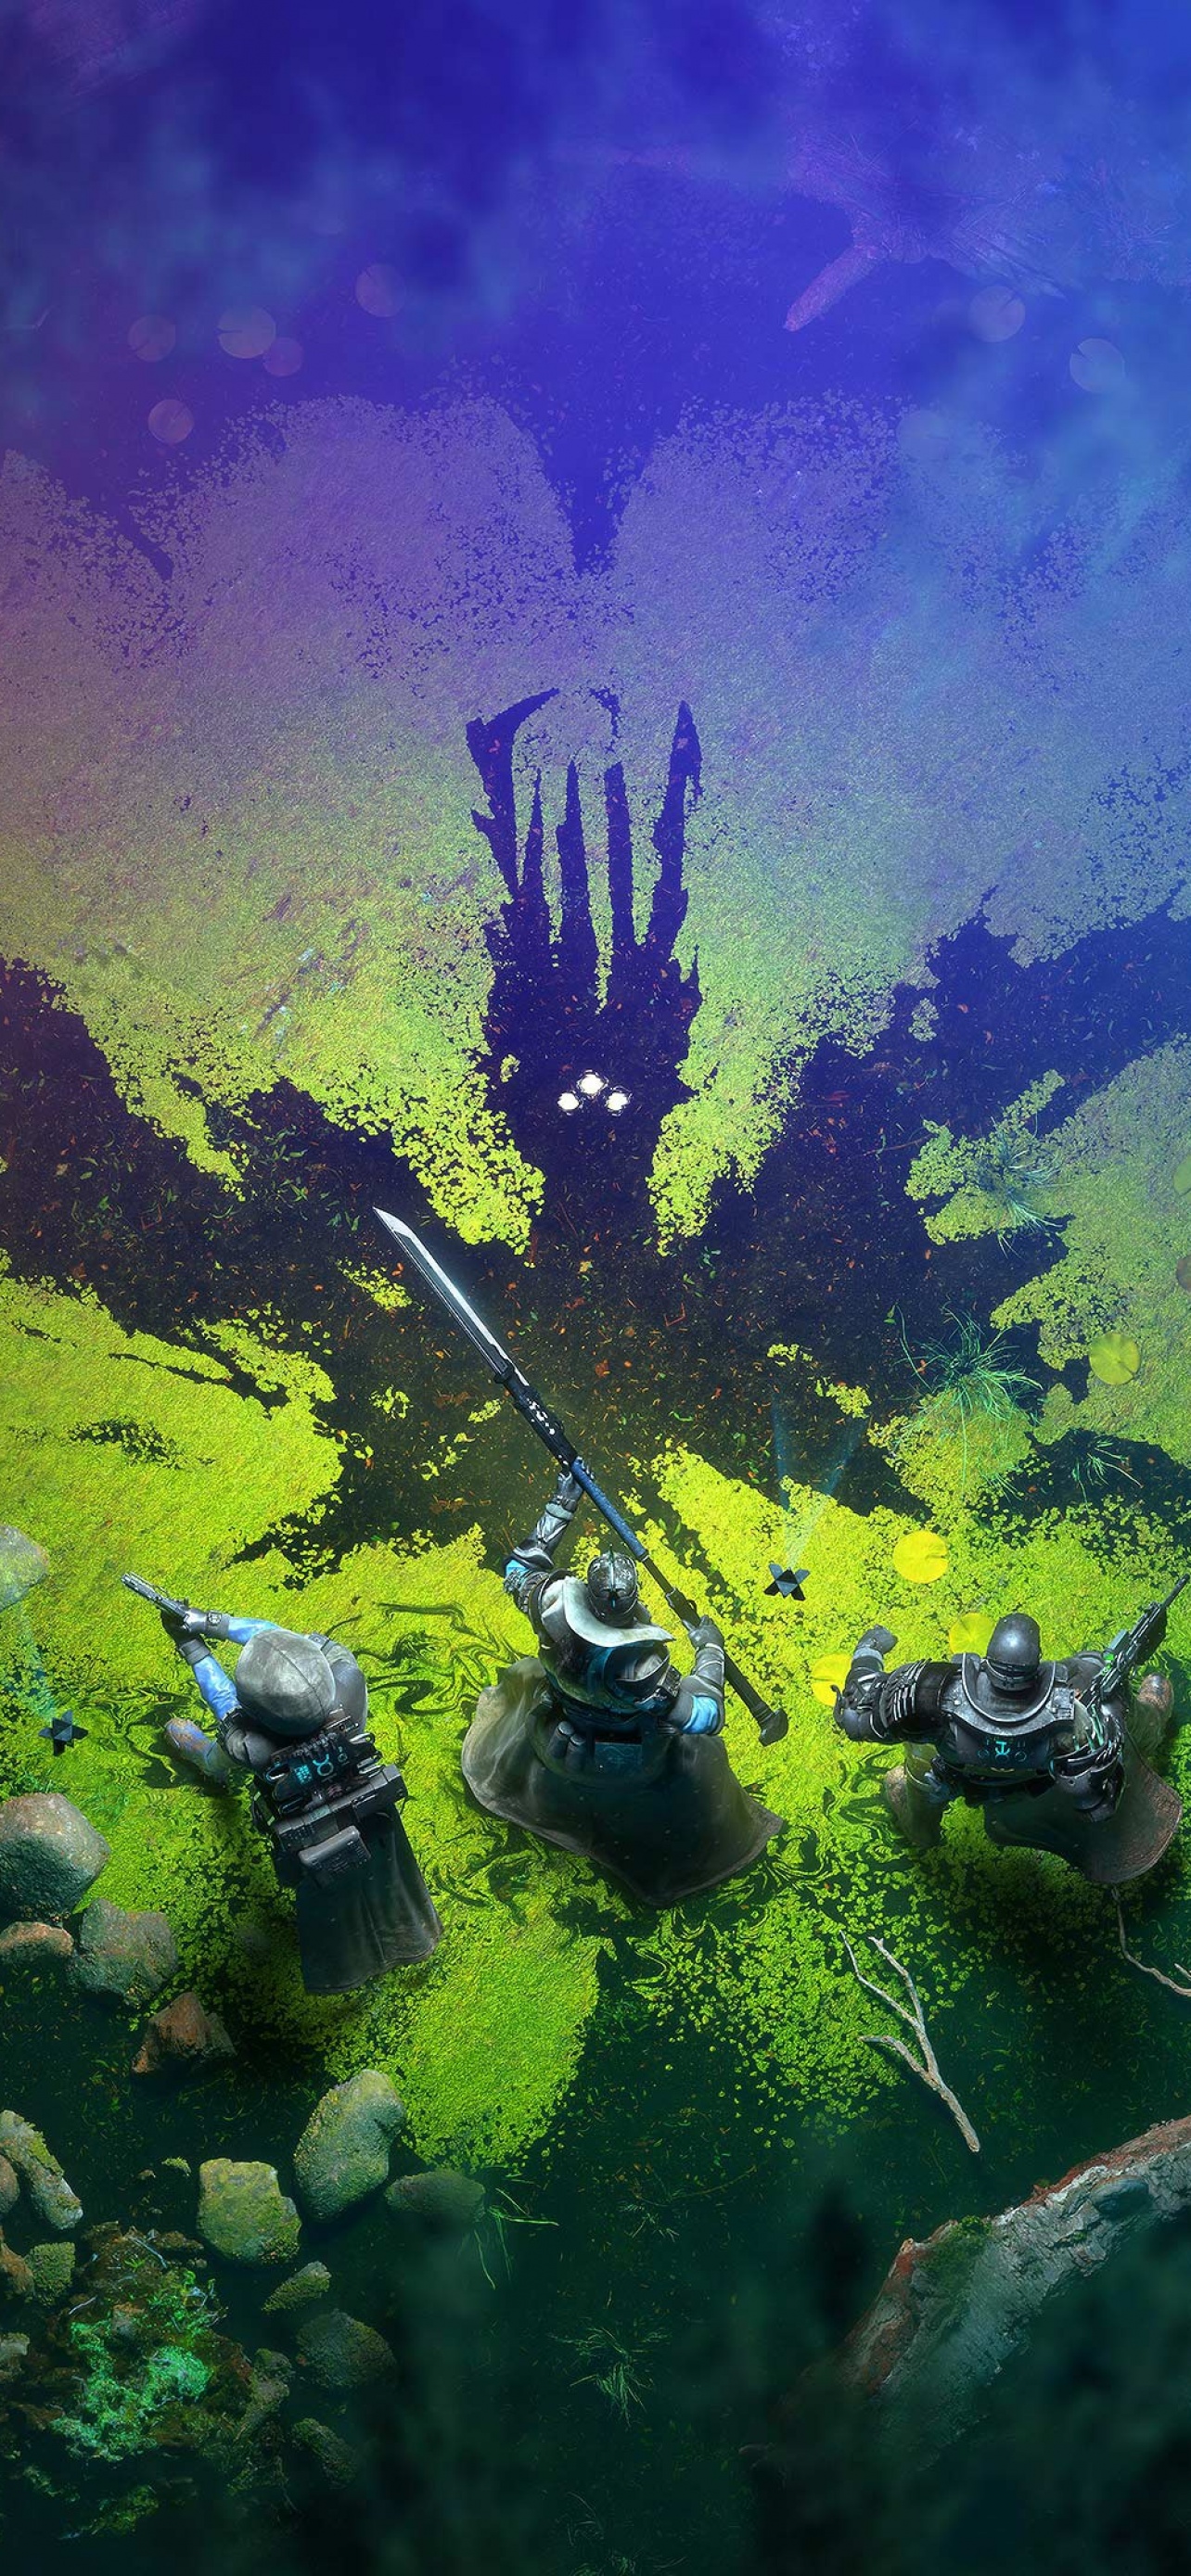 Destiny 2 The Witch Queen Wallpaper 4k Deluxe Edition Titan Hunter Warlock Games 6644